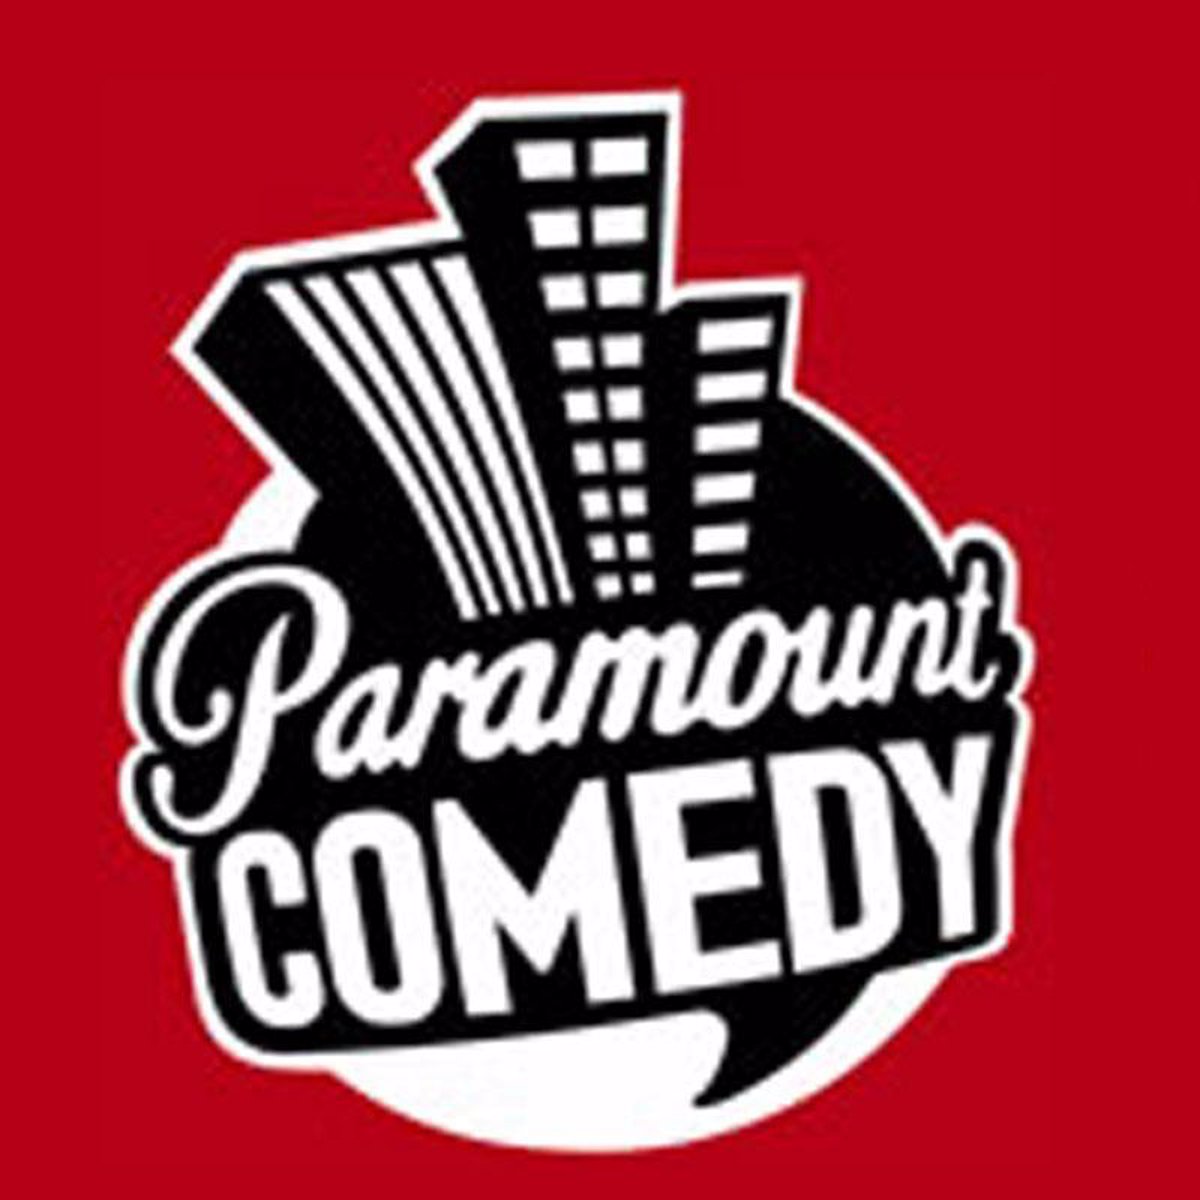 Парамаунт камеди. Телеканал Paramount comedy. Paramount comedy заставки. Paramount comedy Украина. Канал парамаунт камеди